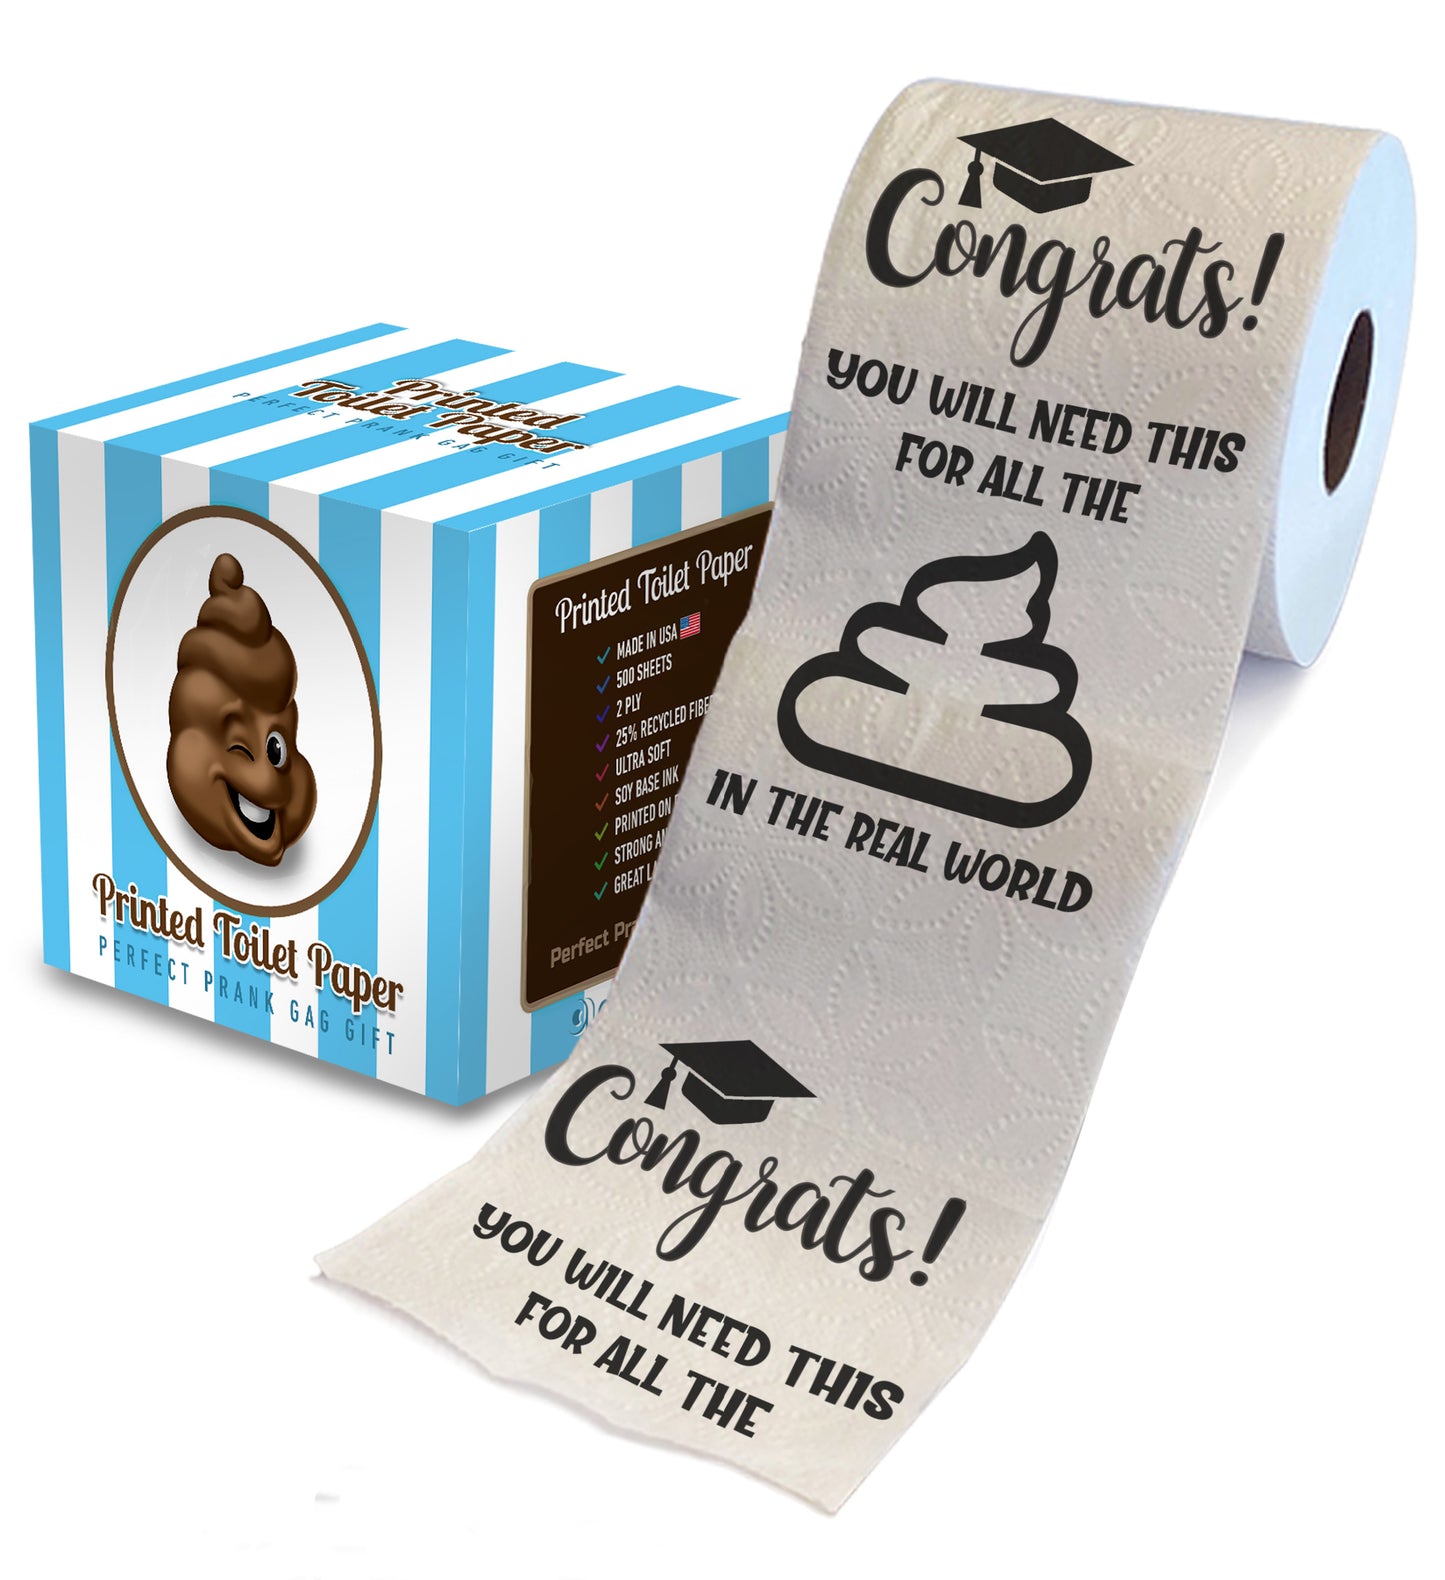 Printed TP Congrats Printed Toilet Paper Graduation Gag Gift, 500 Sheets